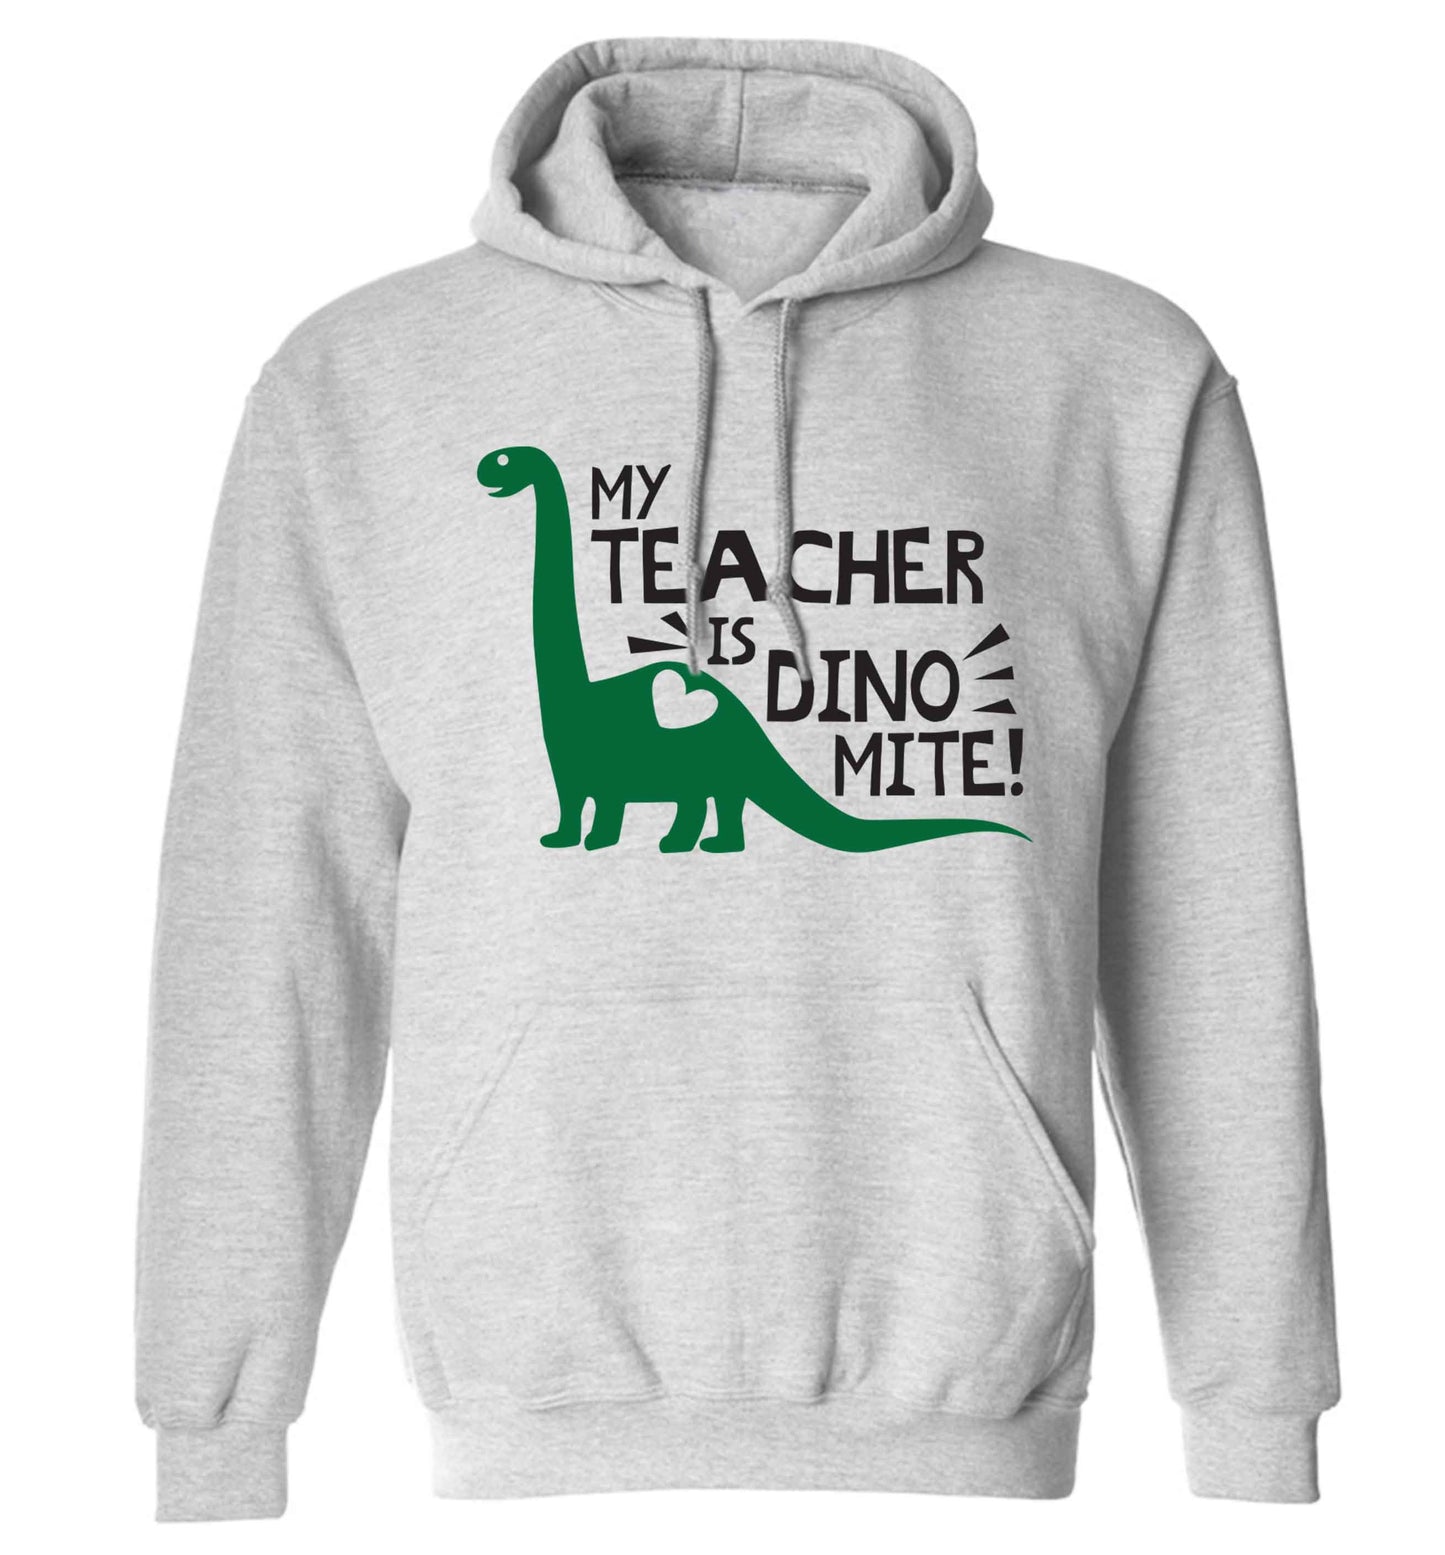 My teacher is dinomite! adults unisex grey hoodie 2XL